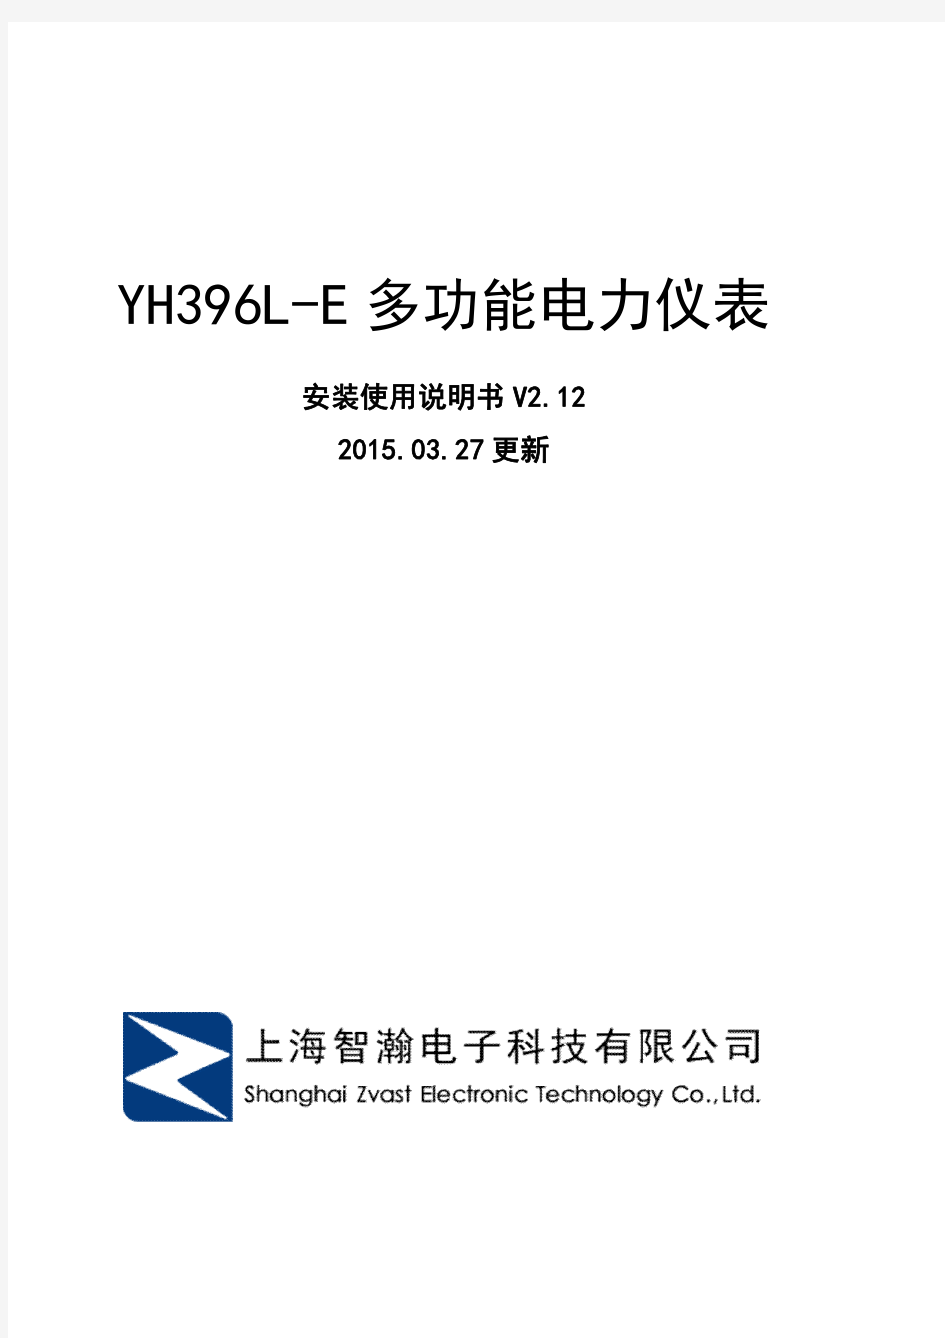 YH396L-E三相多功能电力仪表说明书手册V2.12-正式版